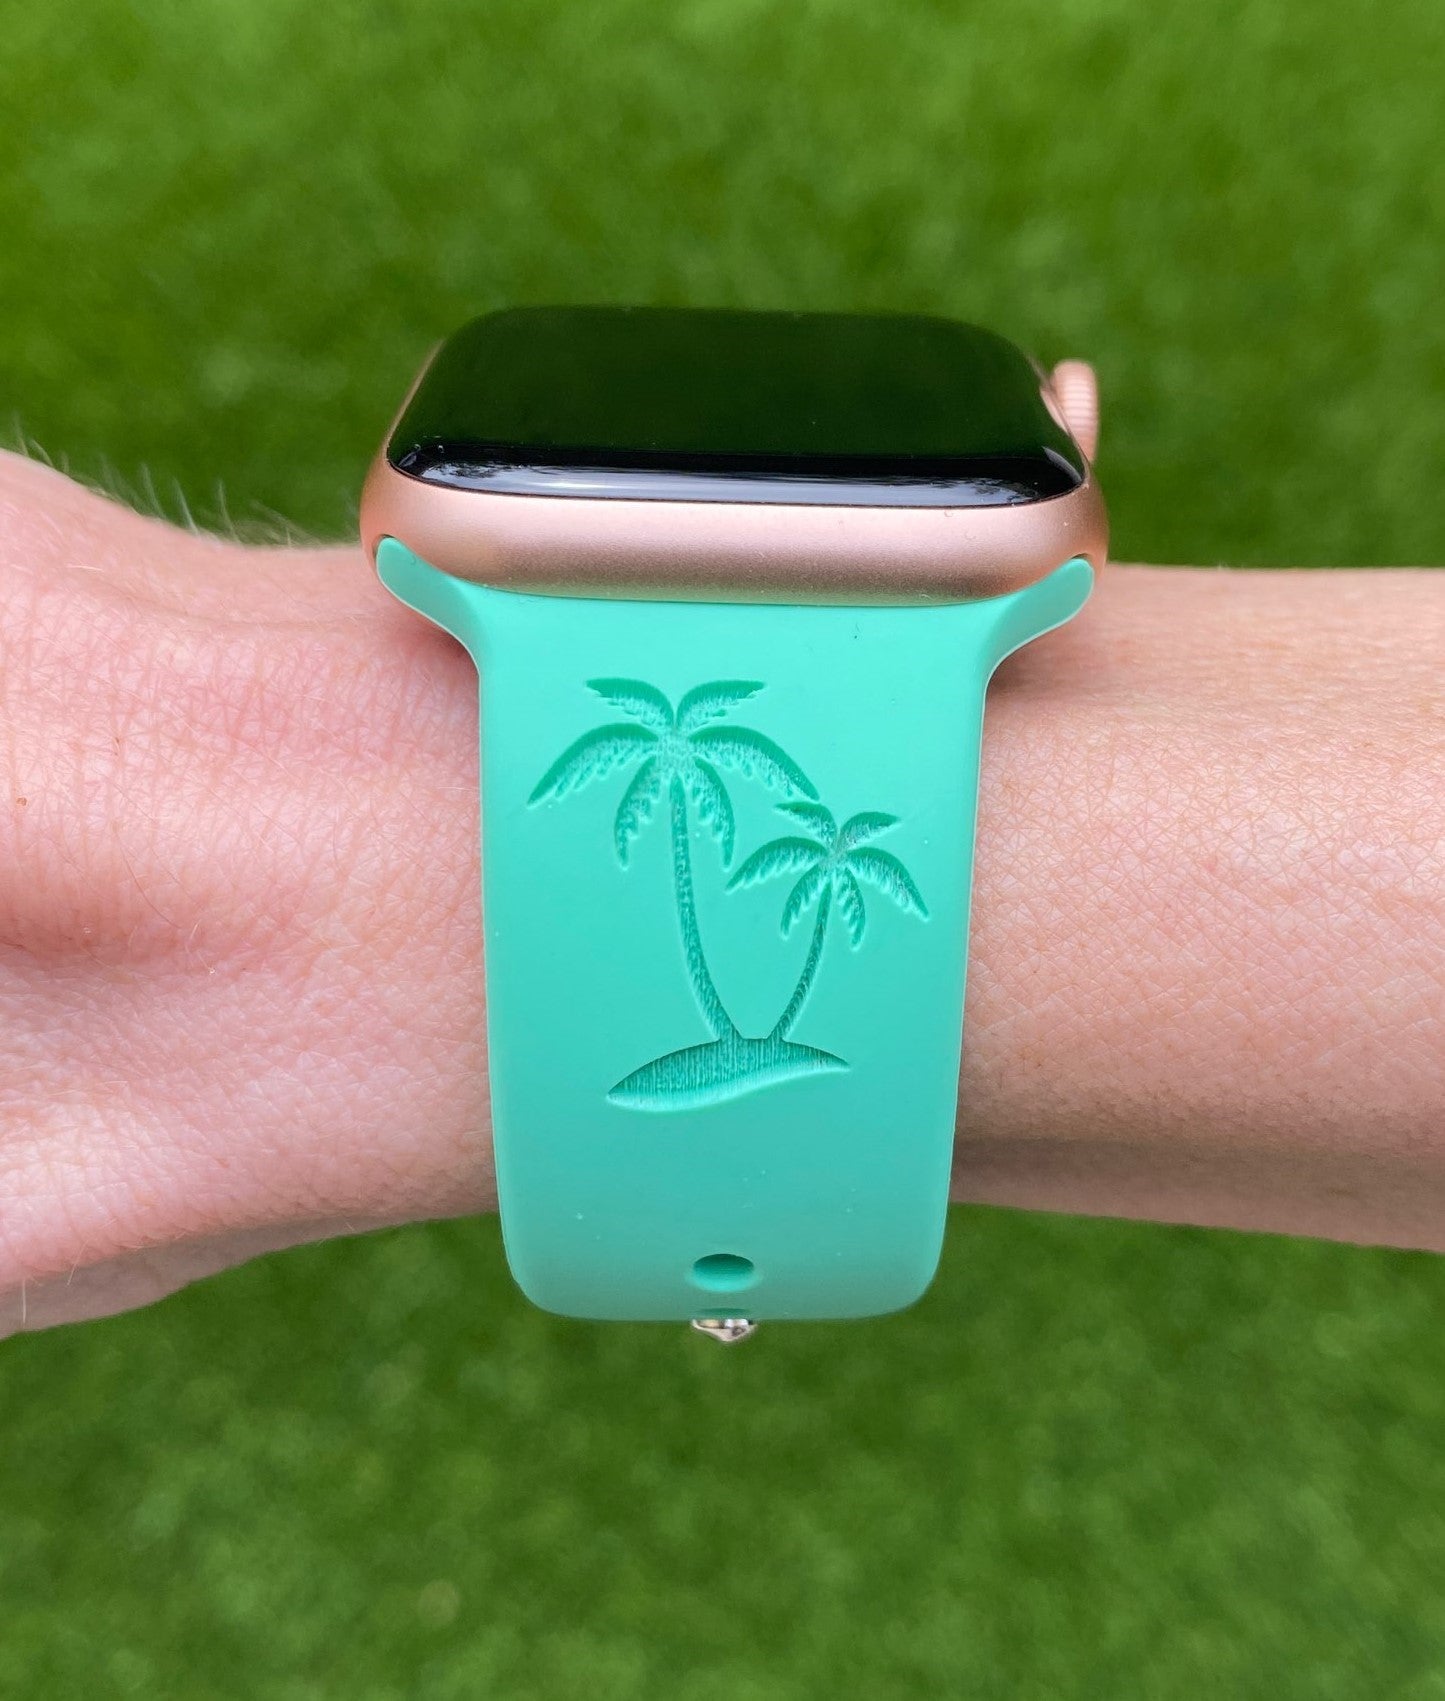 Palm Tree Apple Watch Band